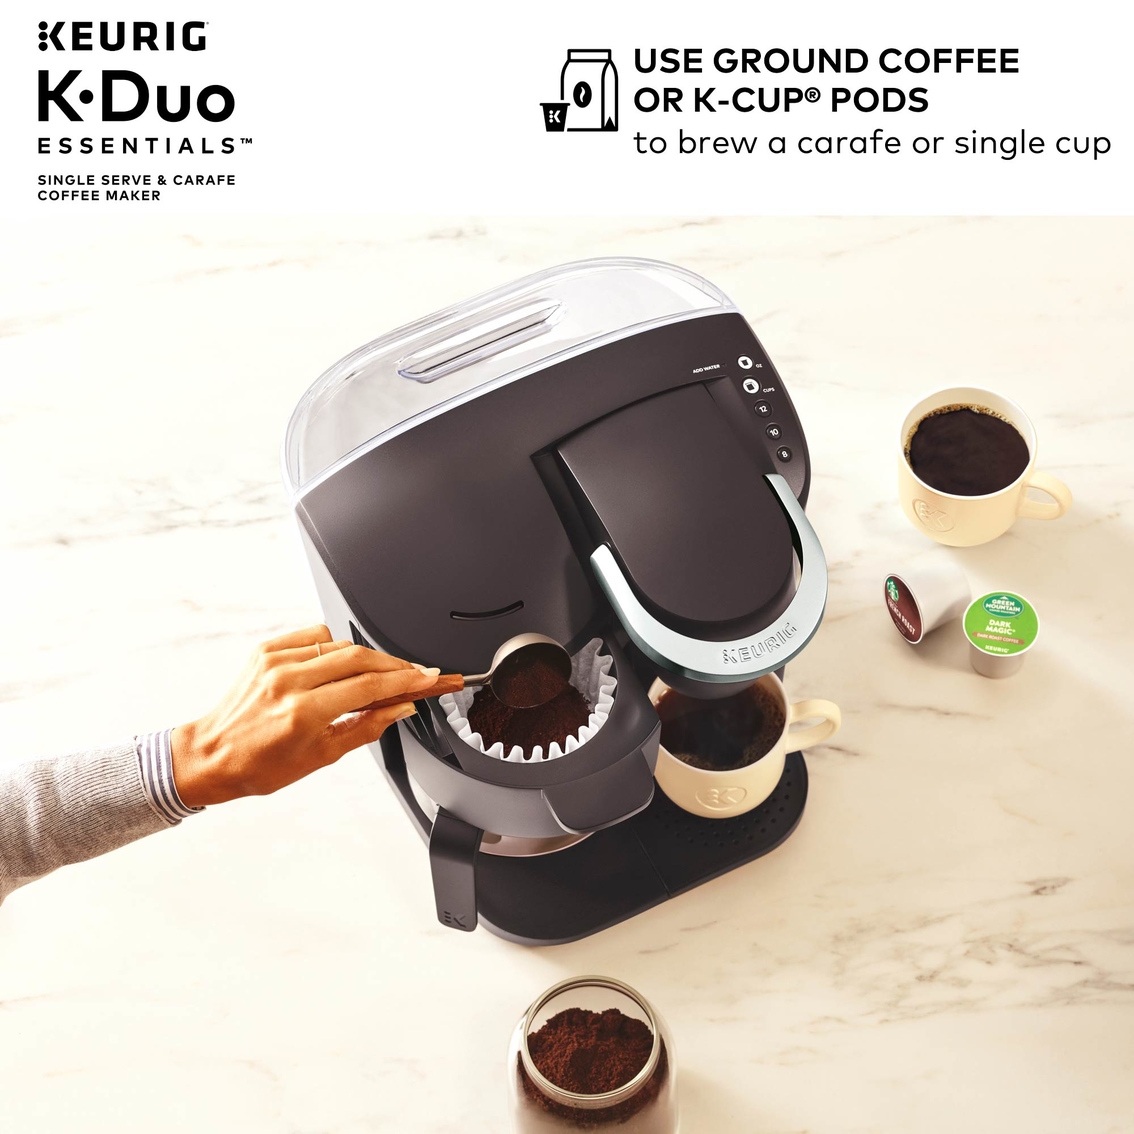 Keurig K-duo Single Serve And Carafe Coffee Maker